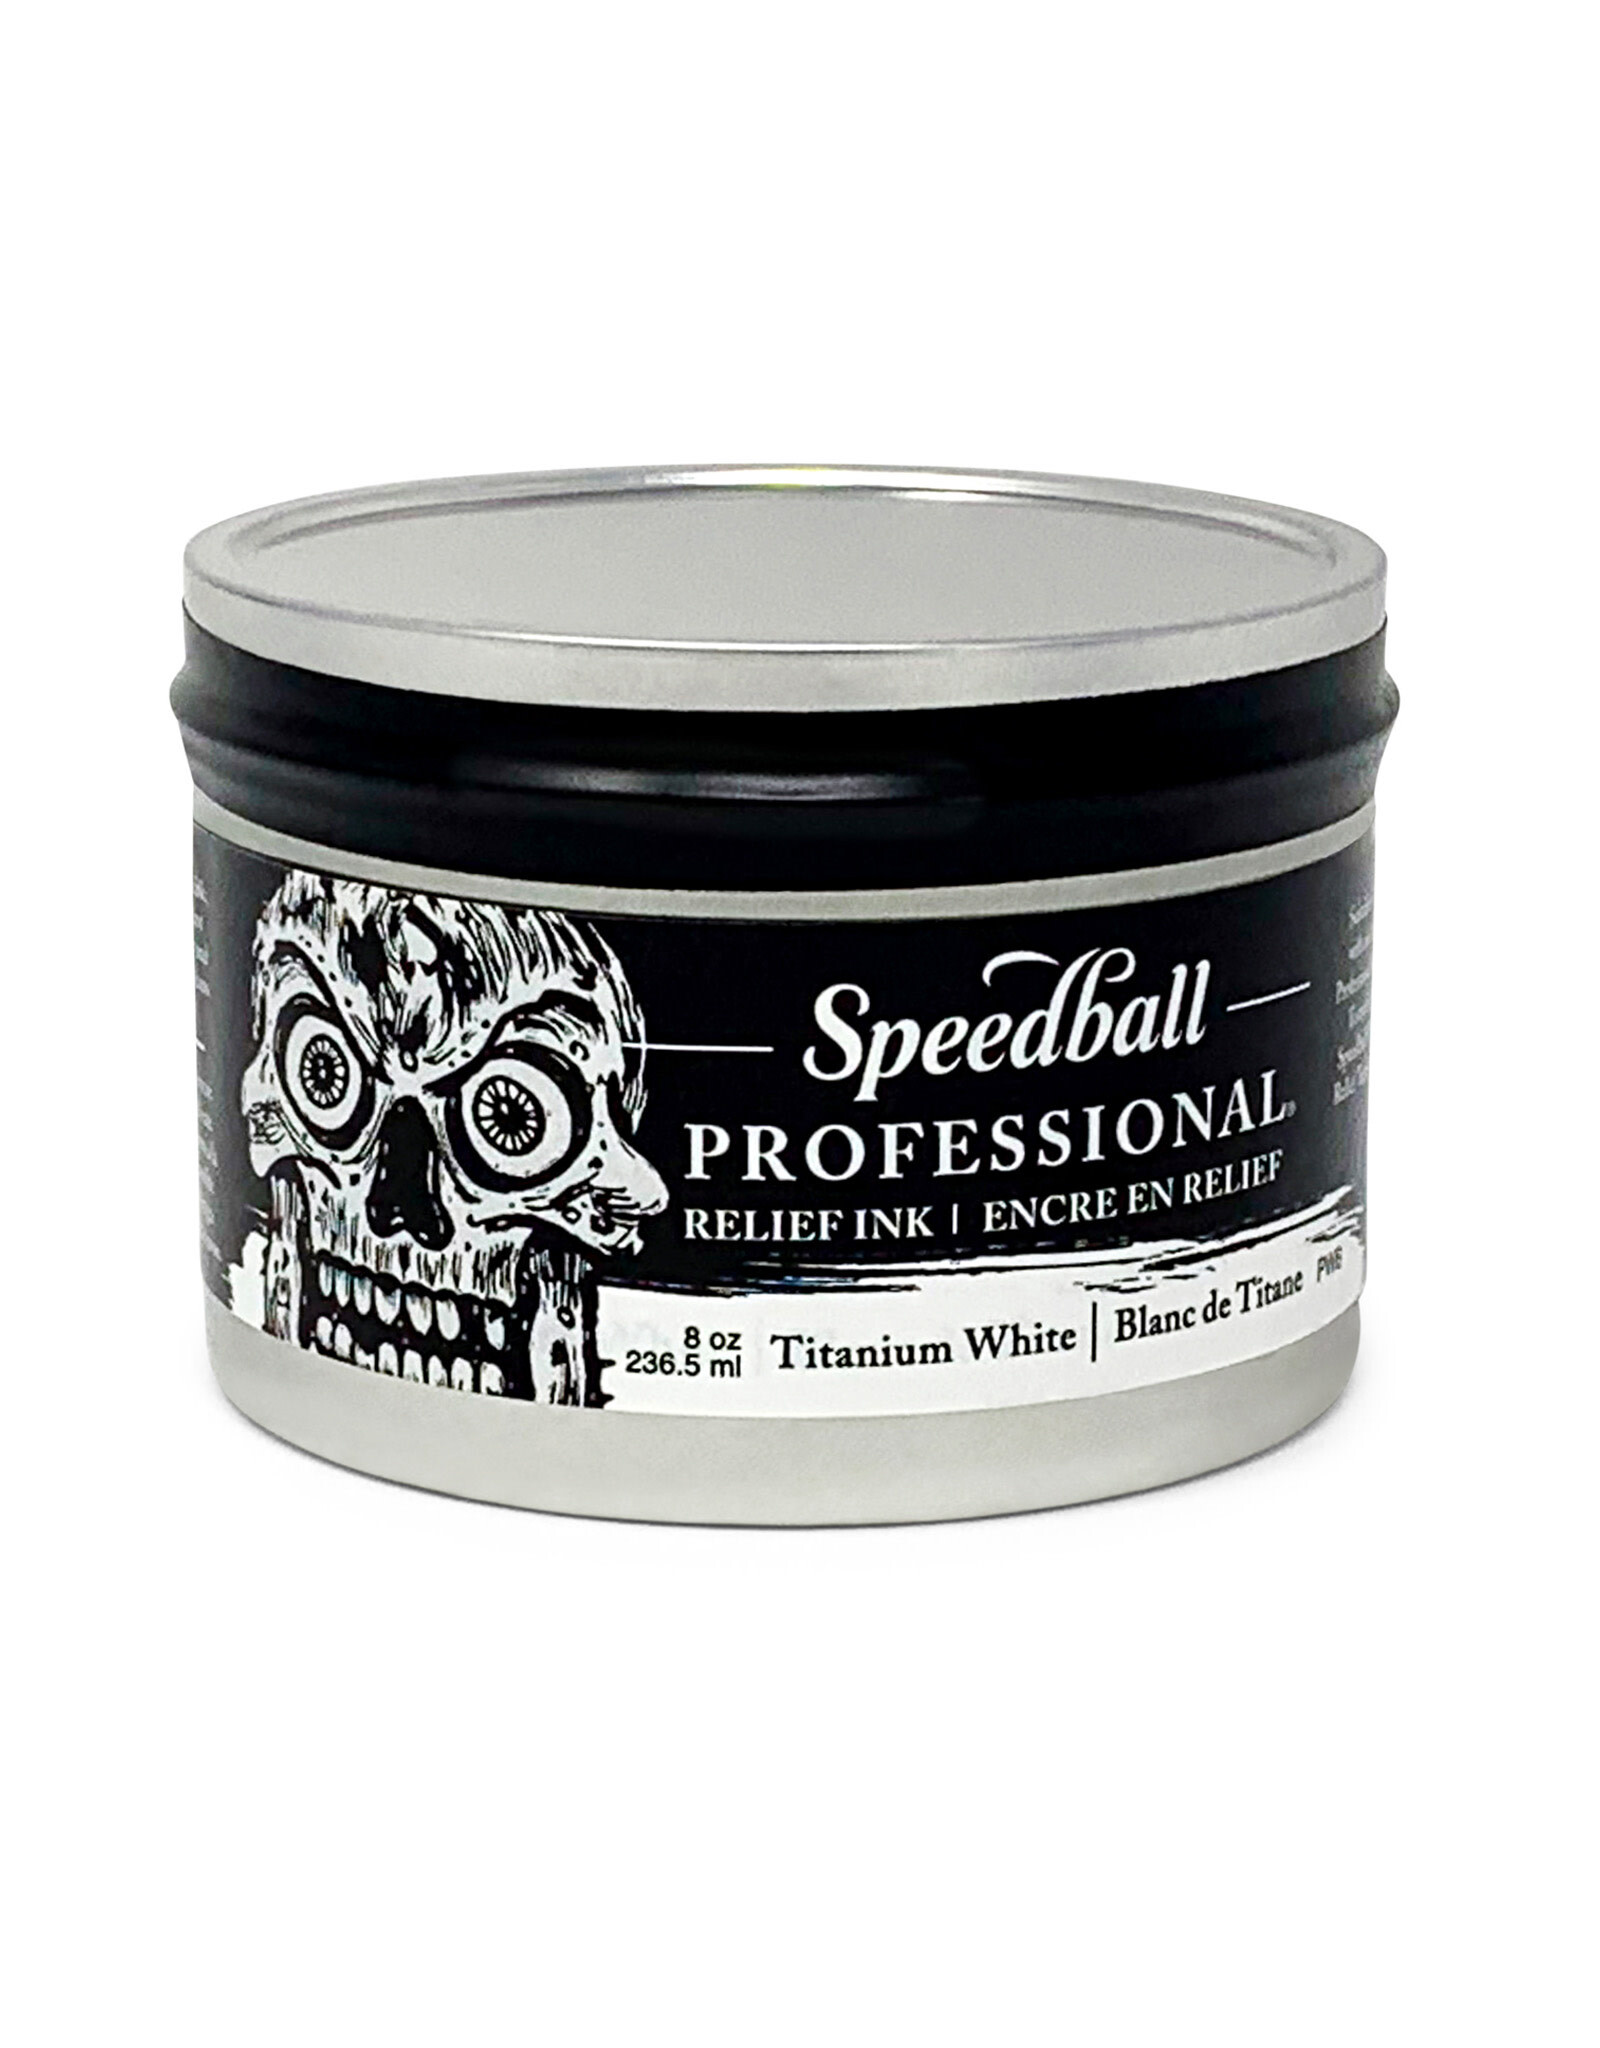 Speedball Professional Relief Ink - Titanium White, 8 oz